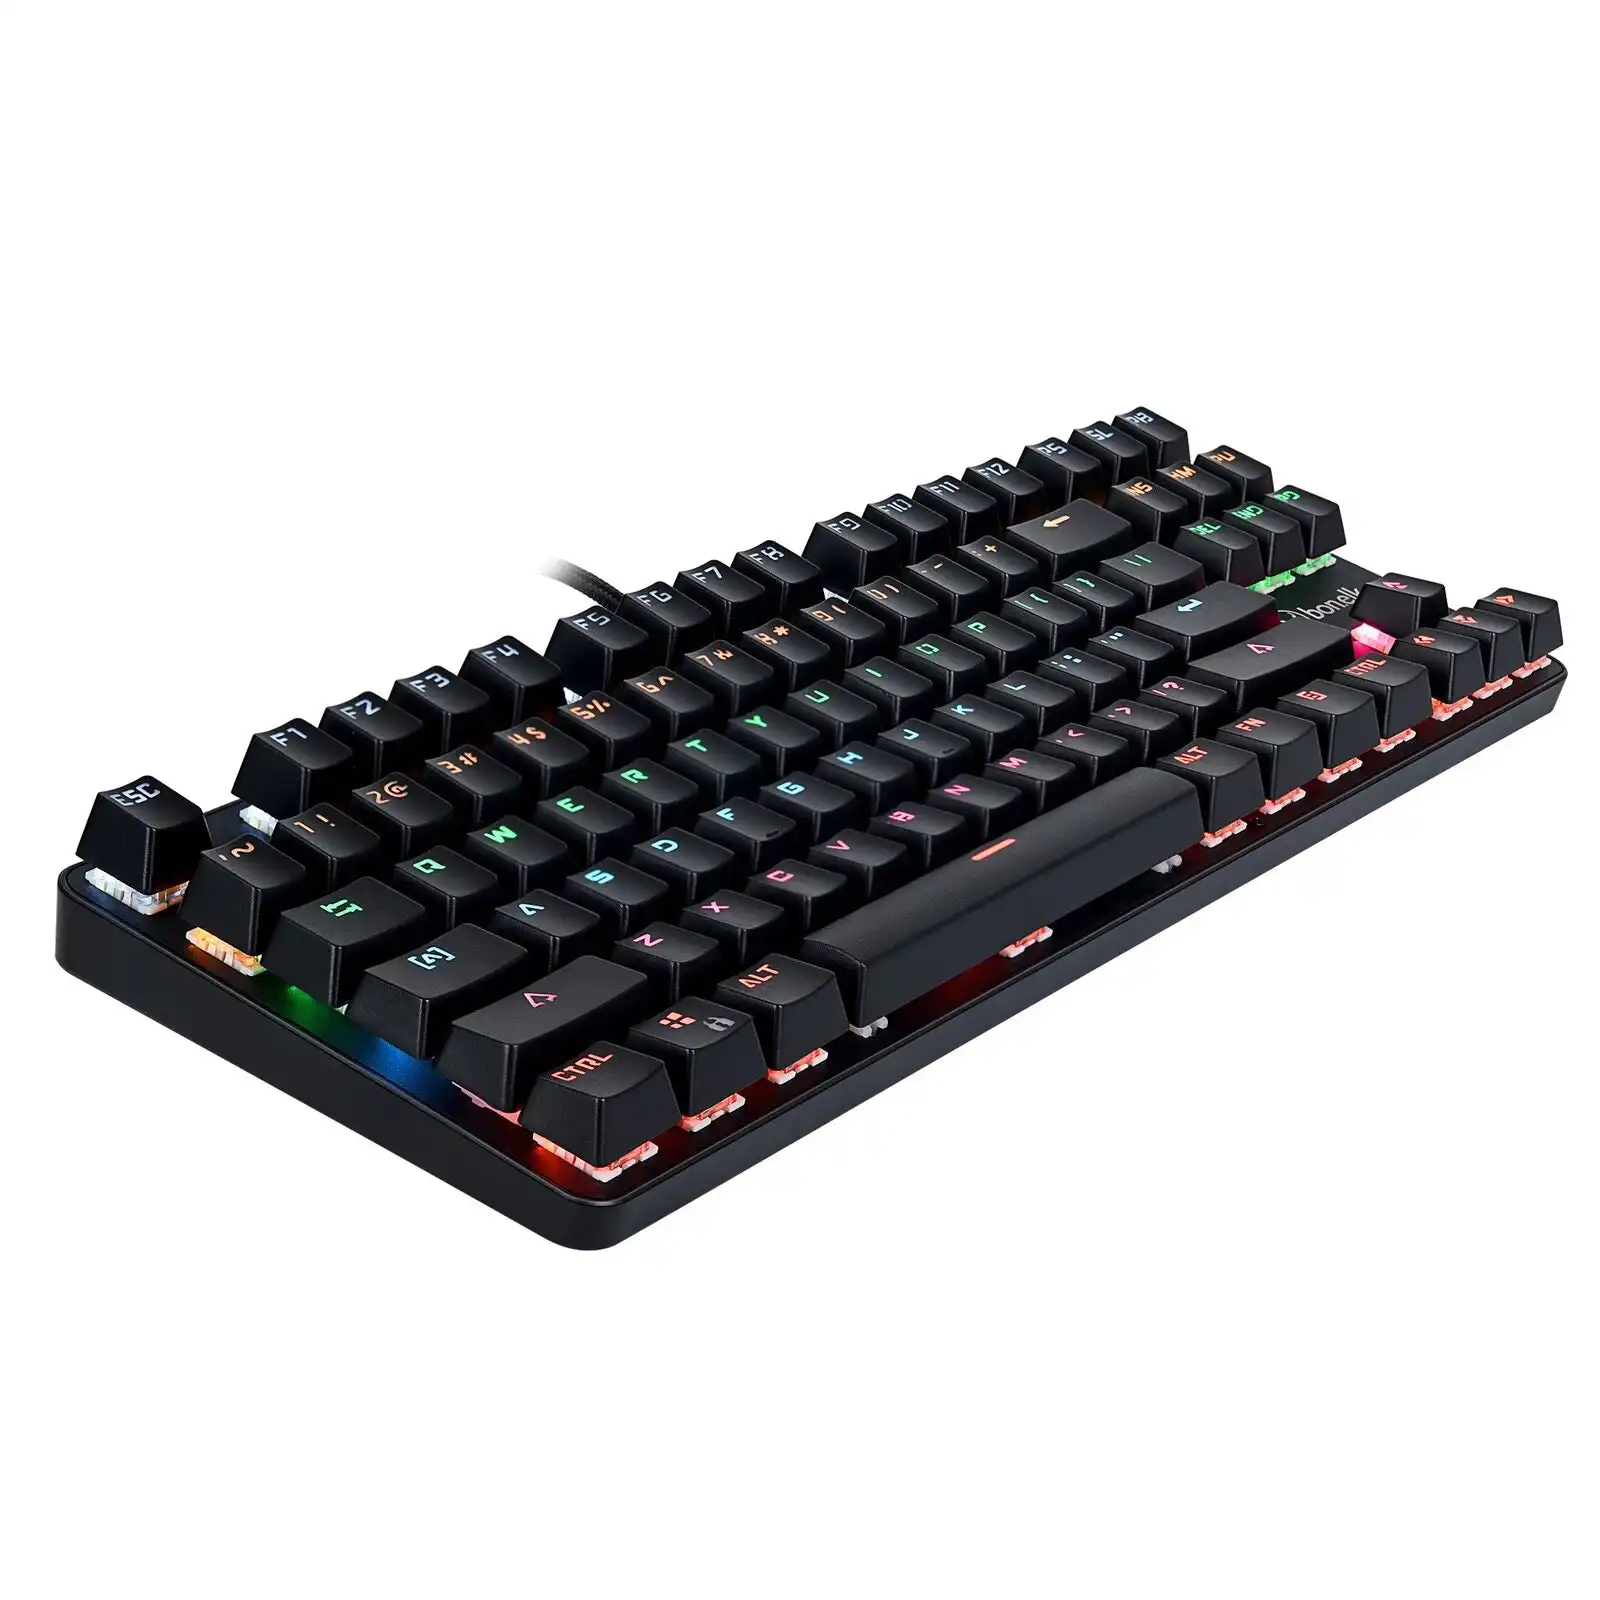 Bonelk Compact Gaming Mechanical Wired RGB Keyboard Rainbow LED Backlit Black